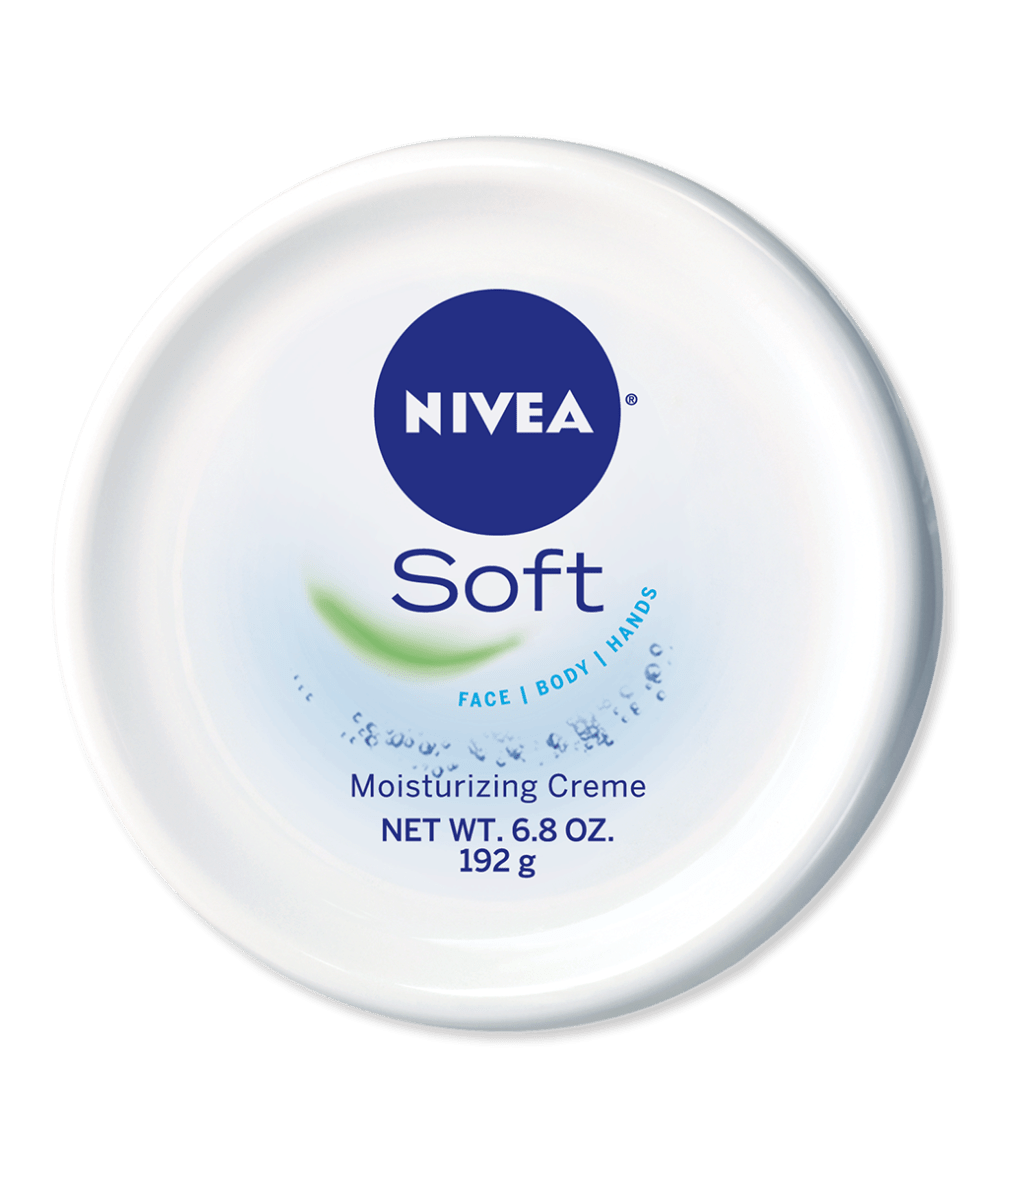 Soft - For Soft Skin All Day NIVEA®